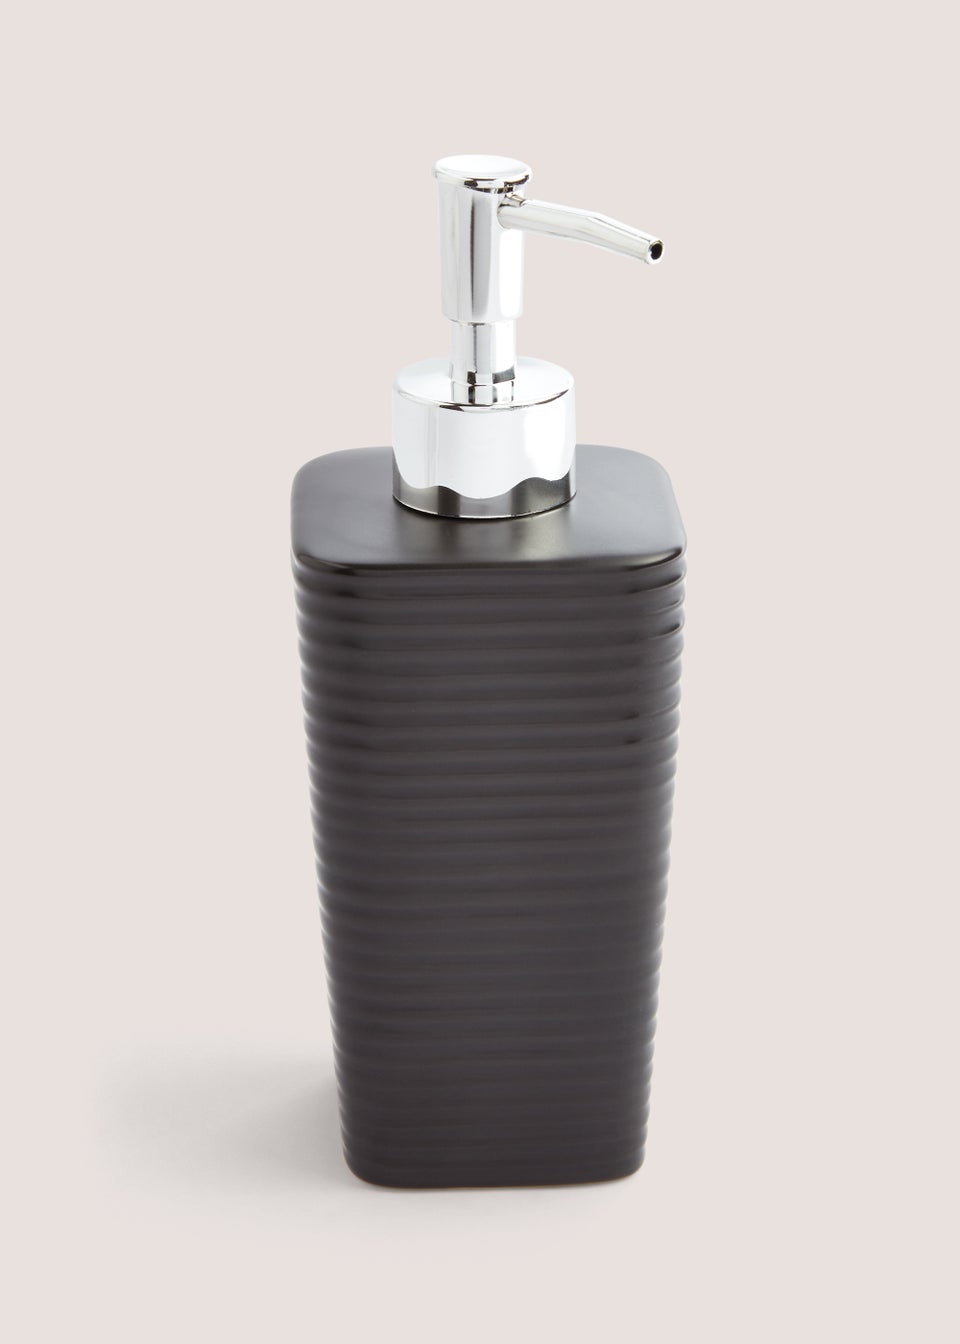 Black Ceramic Soap Dispenser (18cm x 7.5cm x 7.5cm)